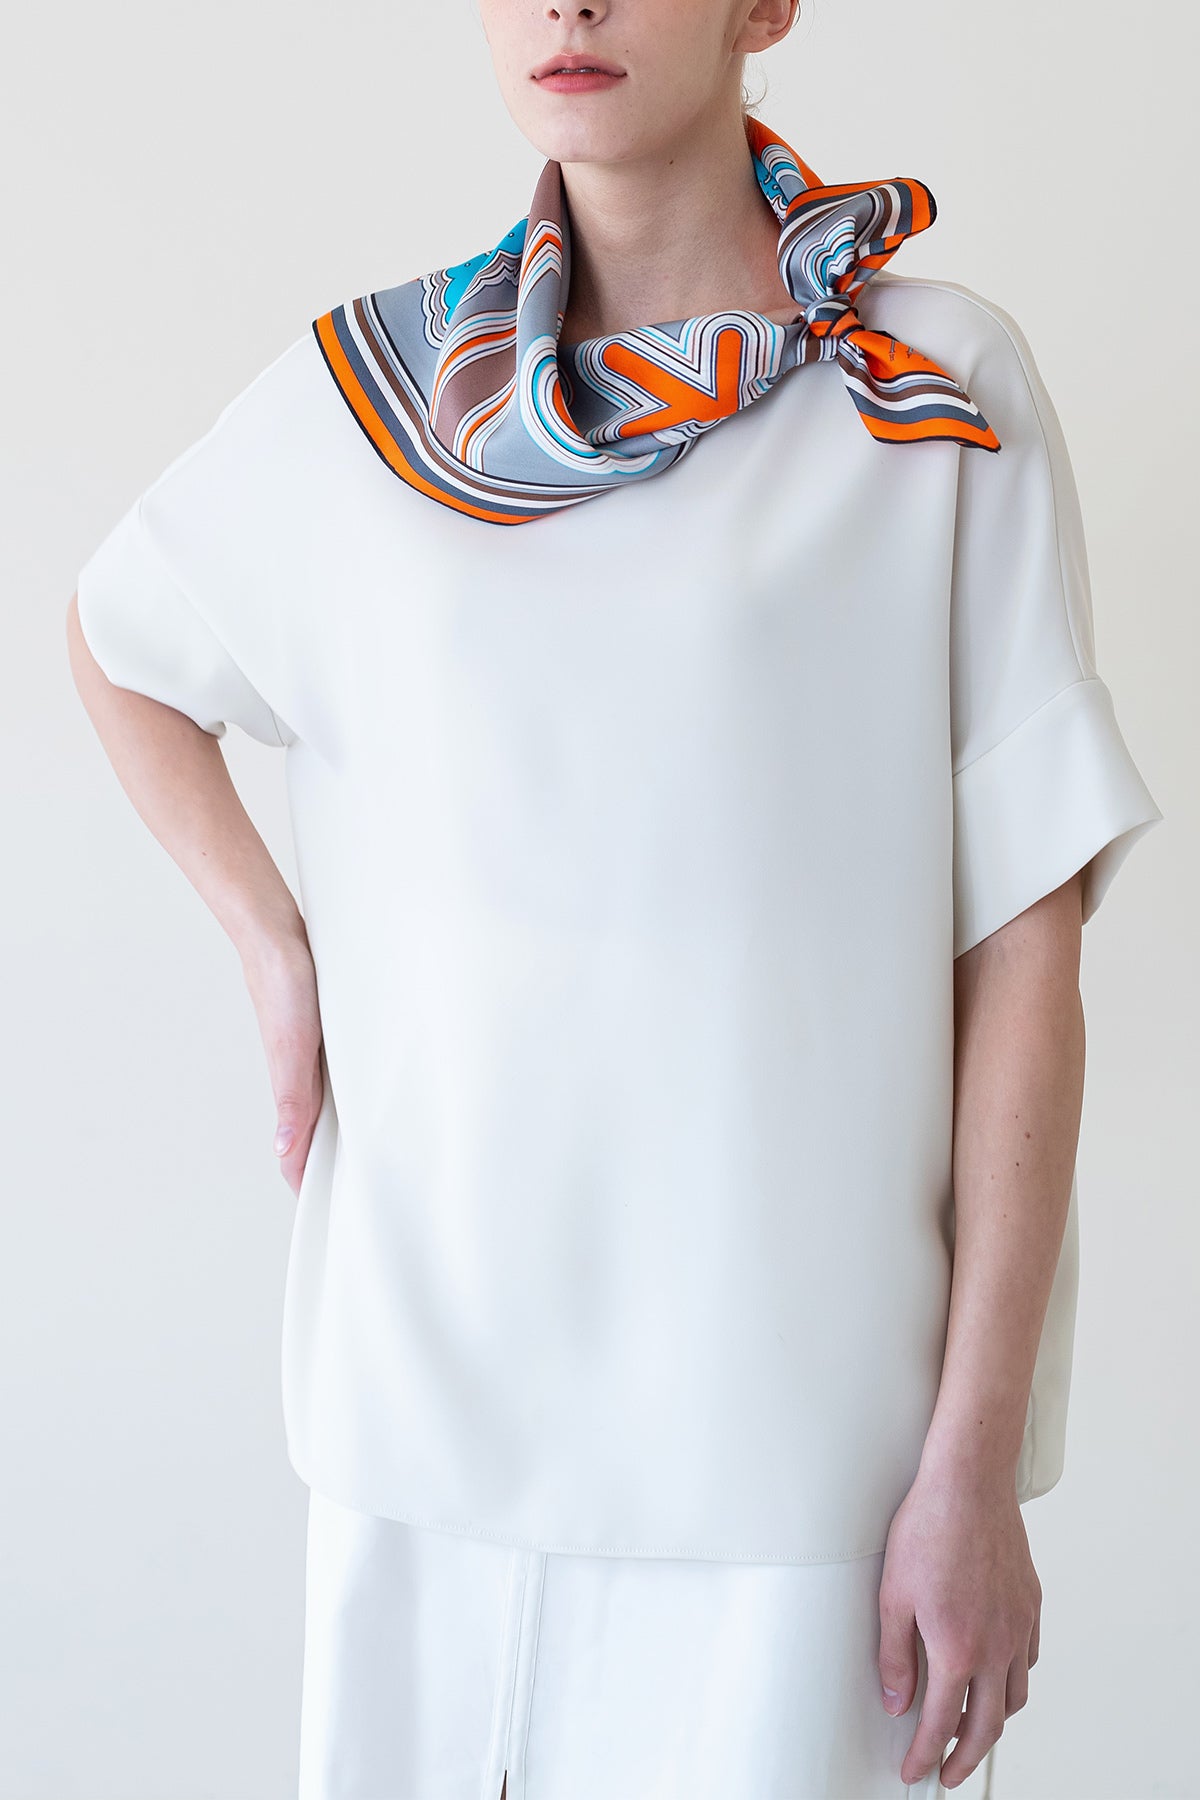 Line Embroidery 70 - Orange